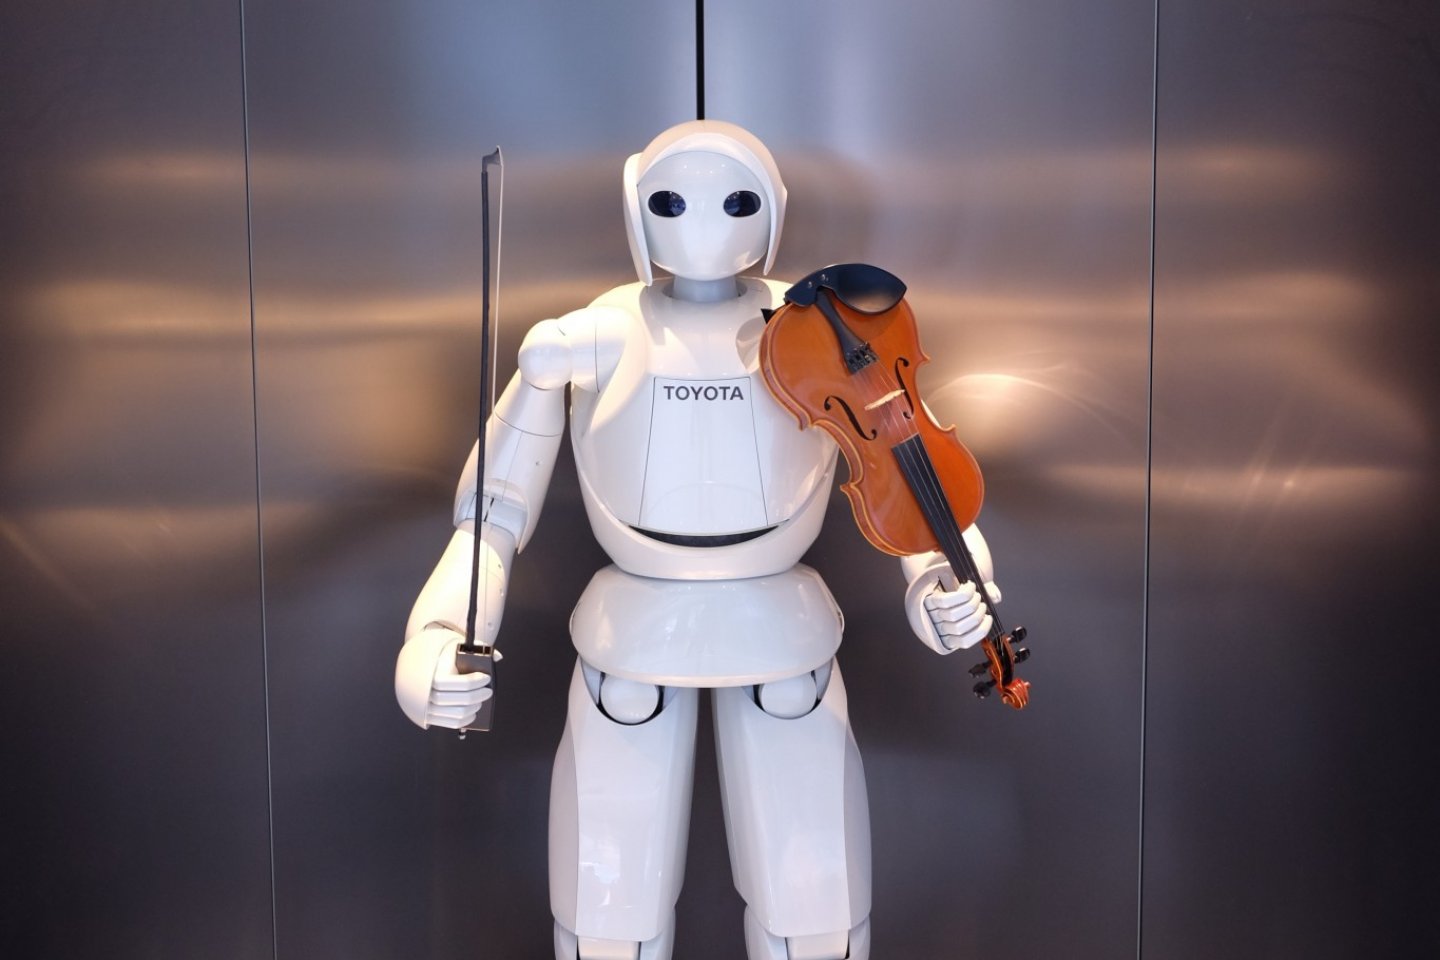 The robot playing violin